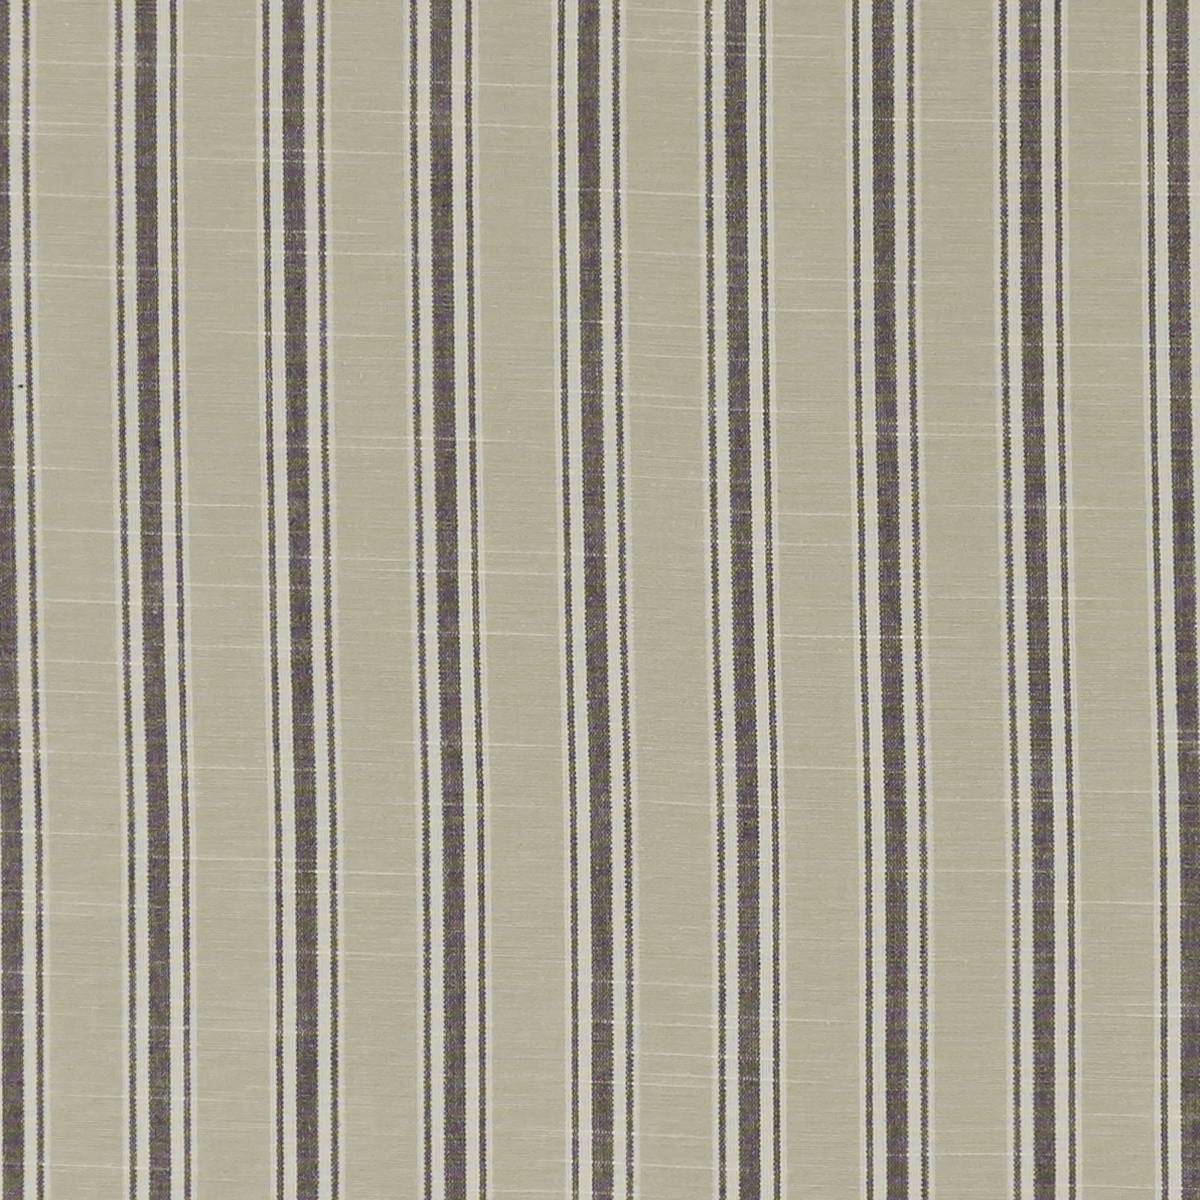 Thornwick Charcoal Fabric by Studio G